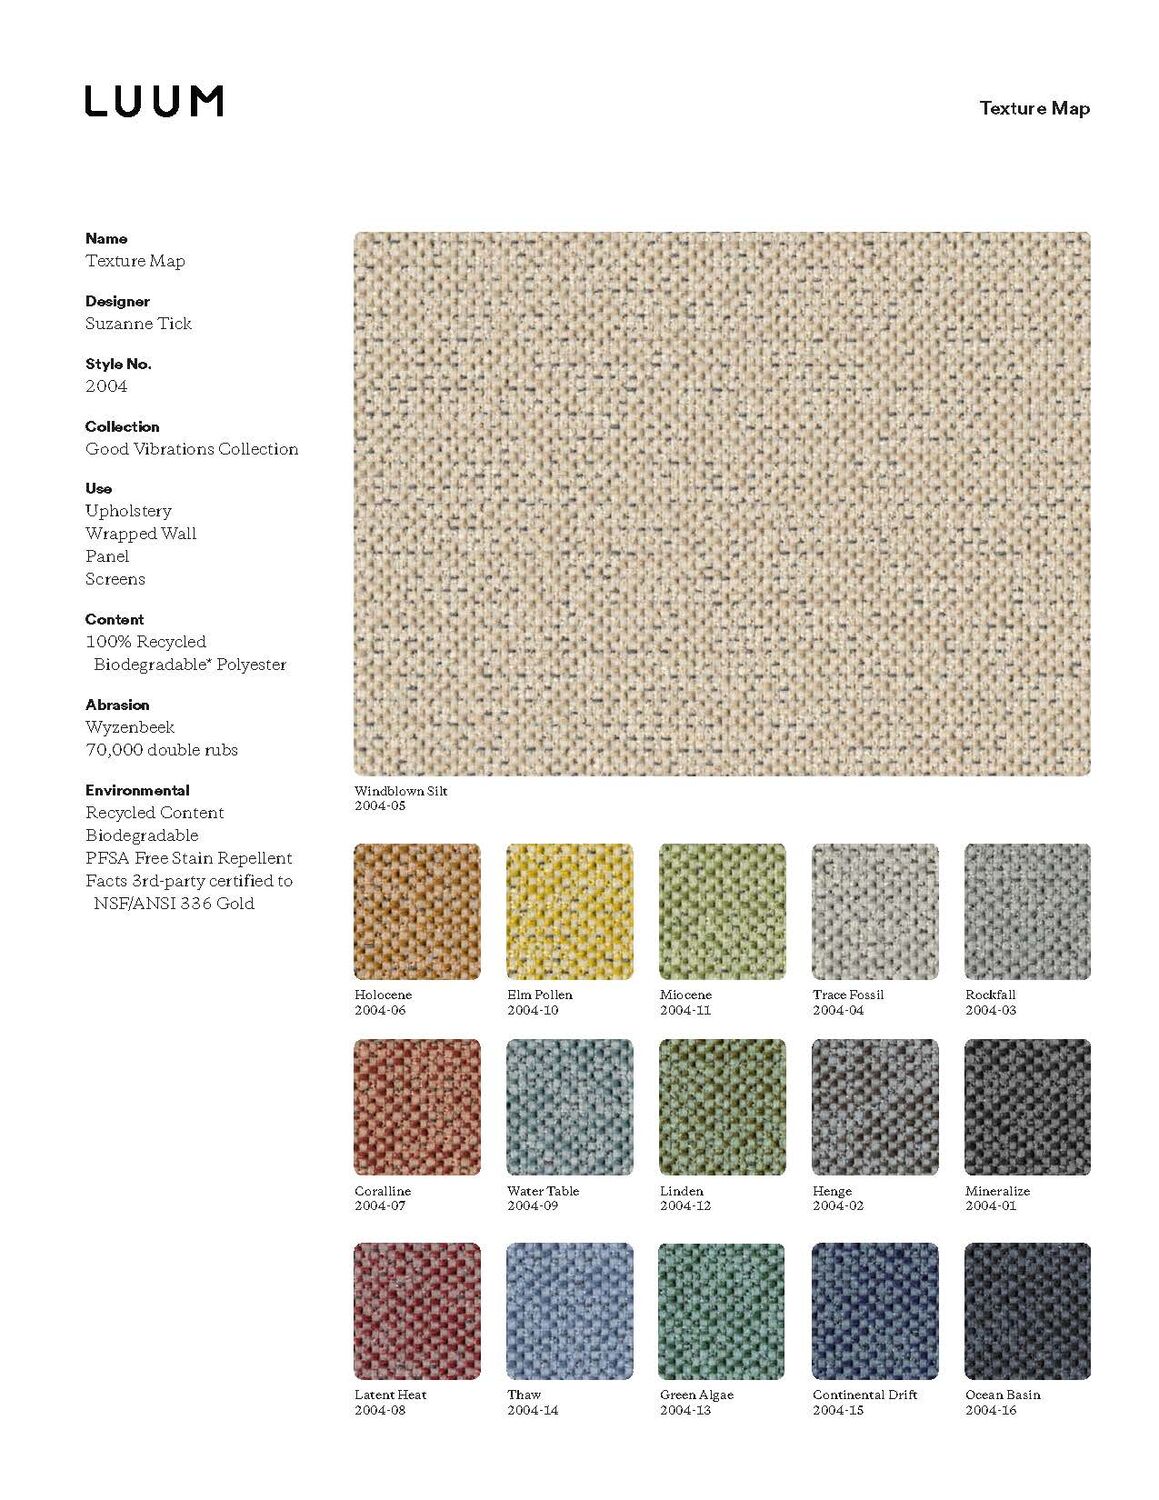 Texture Map - Coralline - 2004 - 07 Sample Card